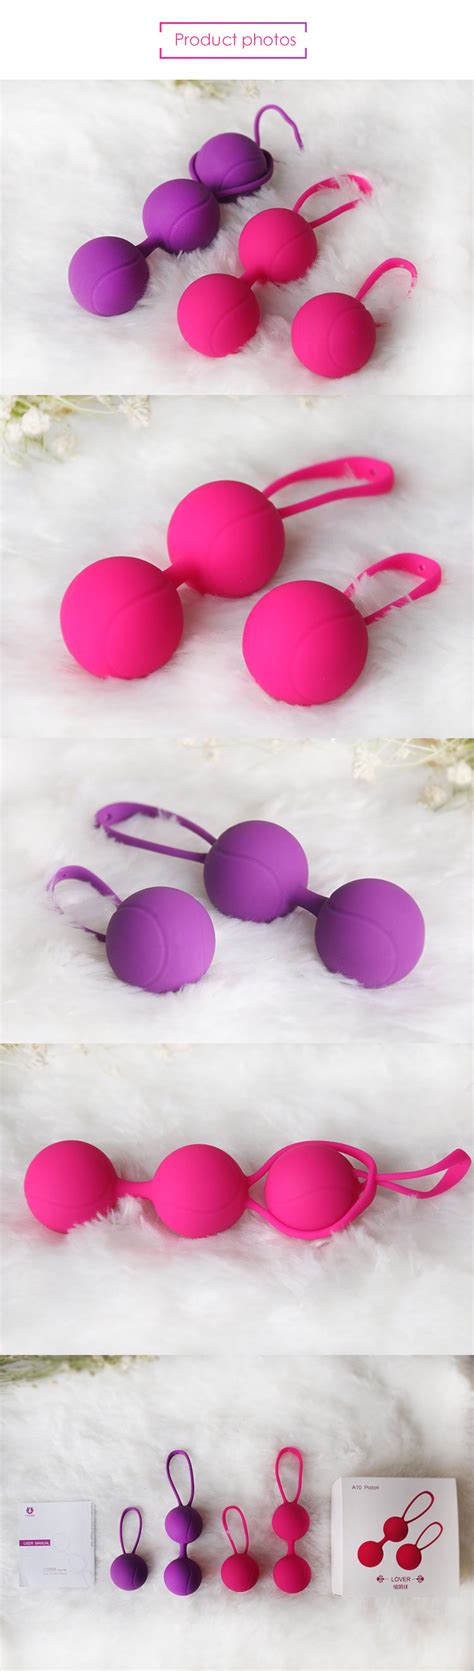 hot selling kegel exercise weight set of 2 geisha balls silicone ben wa